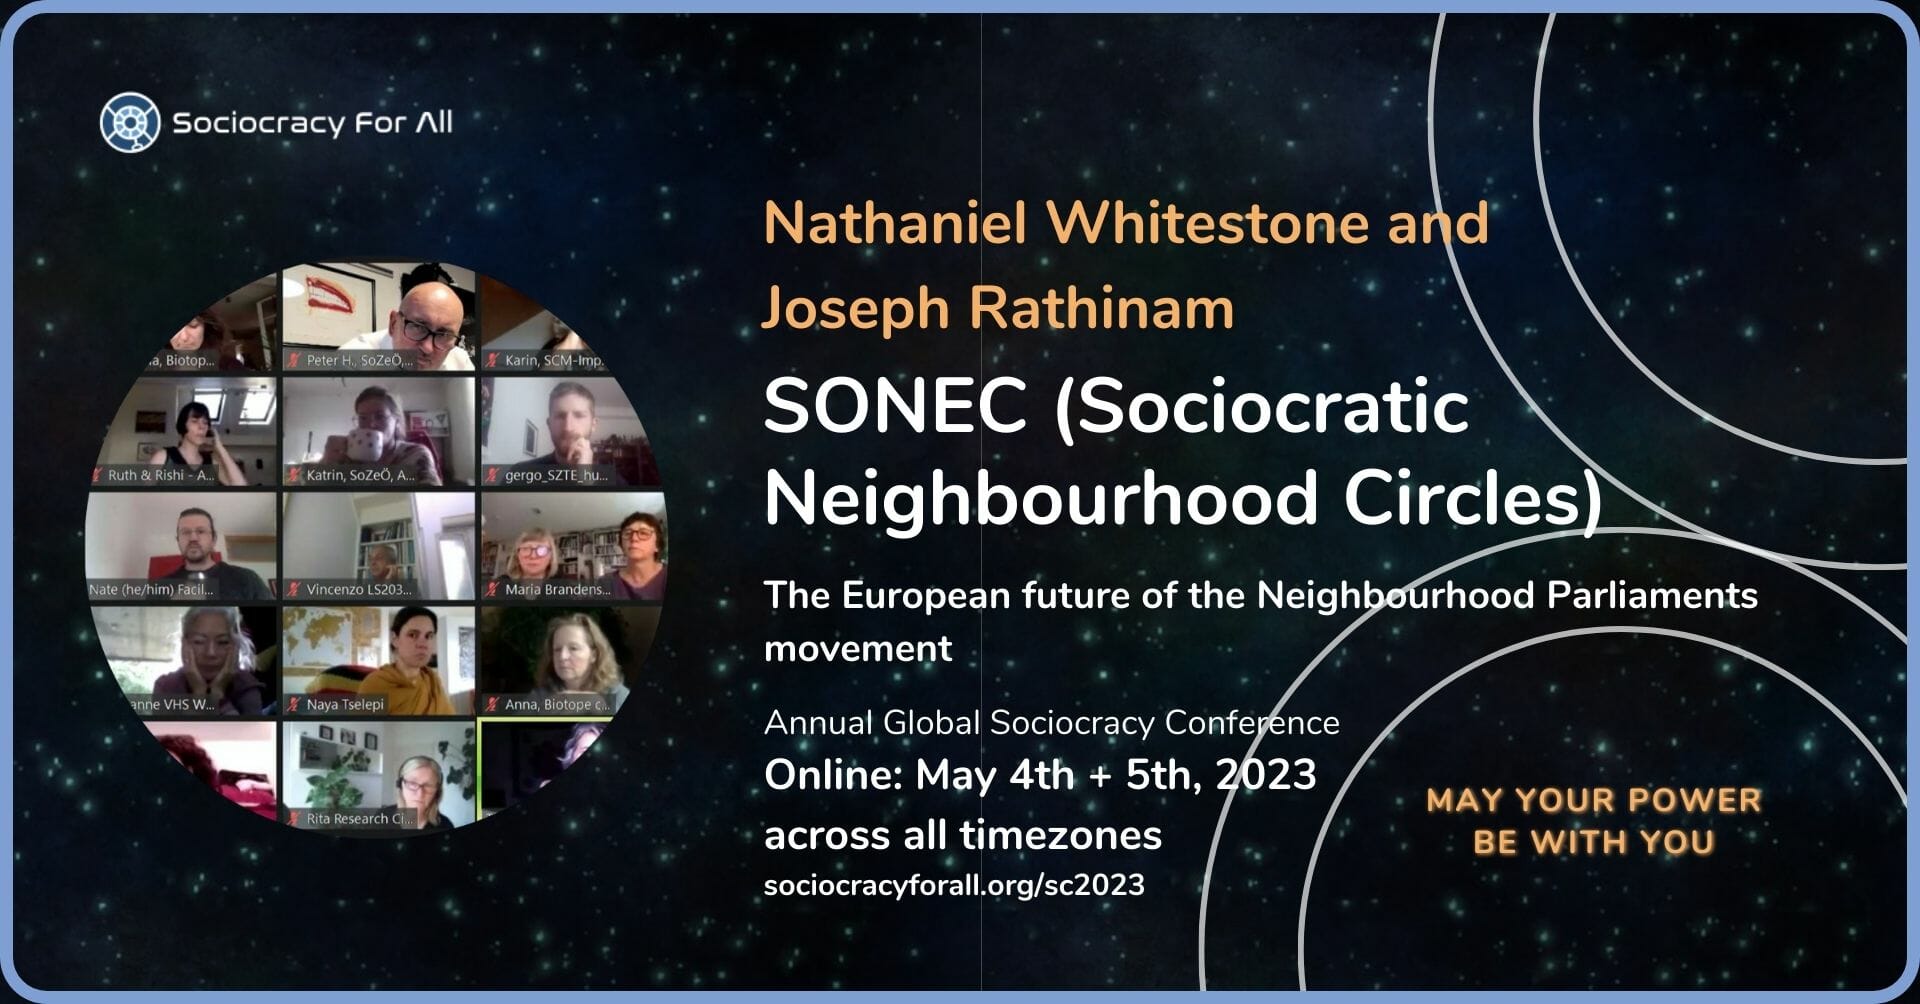 SONEC (Sociocratic Neighbourhood Circles)